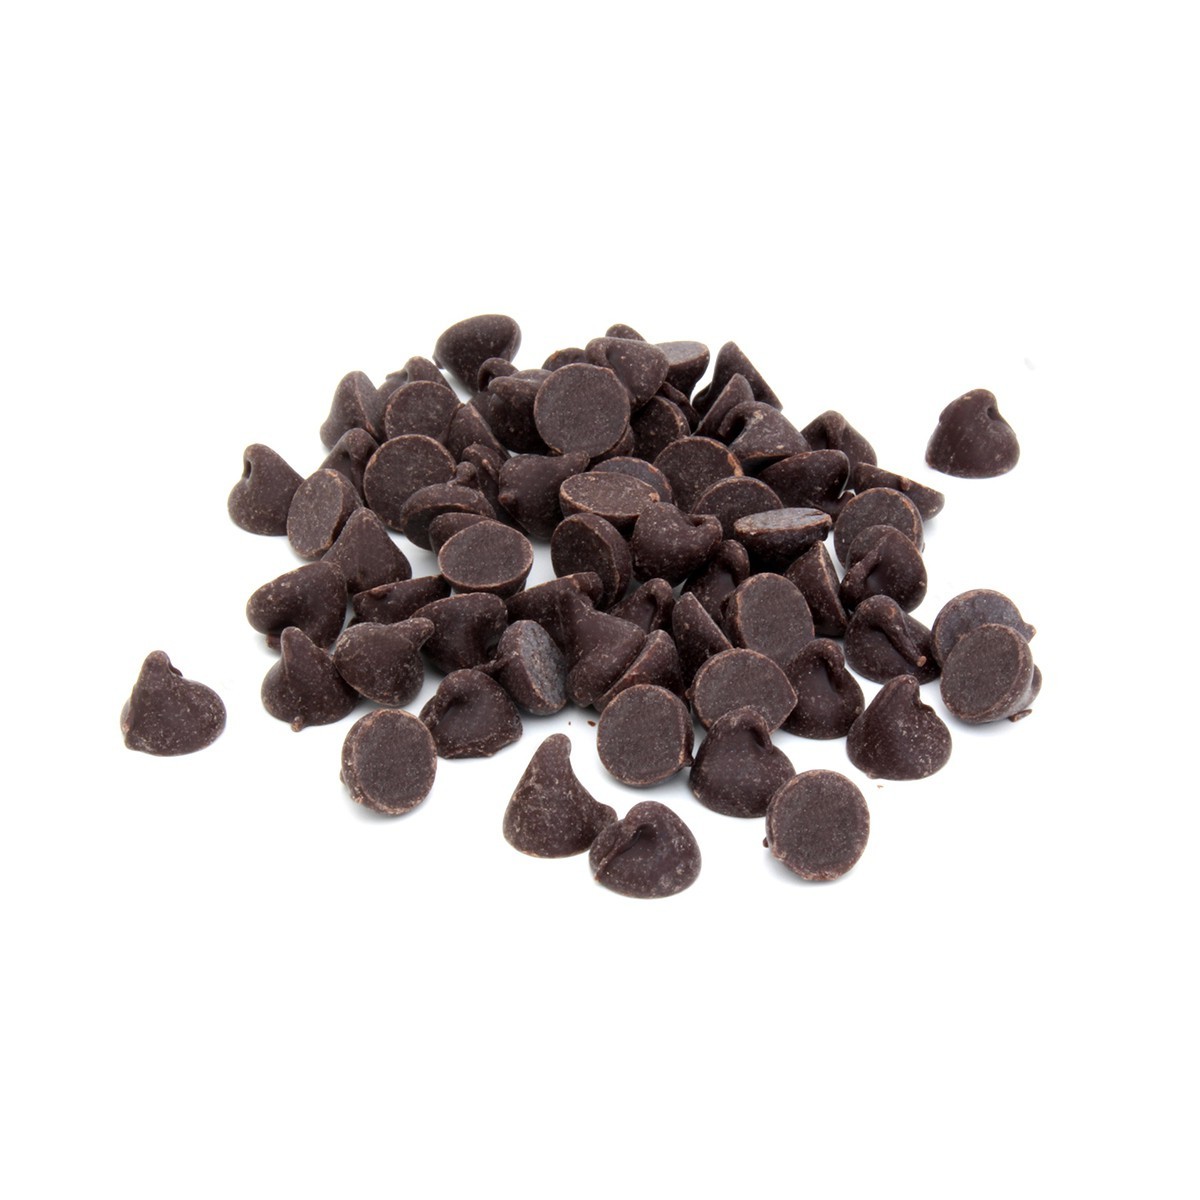 https://www.nosmeilleurescourses.com/8229-big_default_2x/pepites-de-chocolat-noir-72-bio-equitable-vrac-rhd-5-kg.jpg